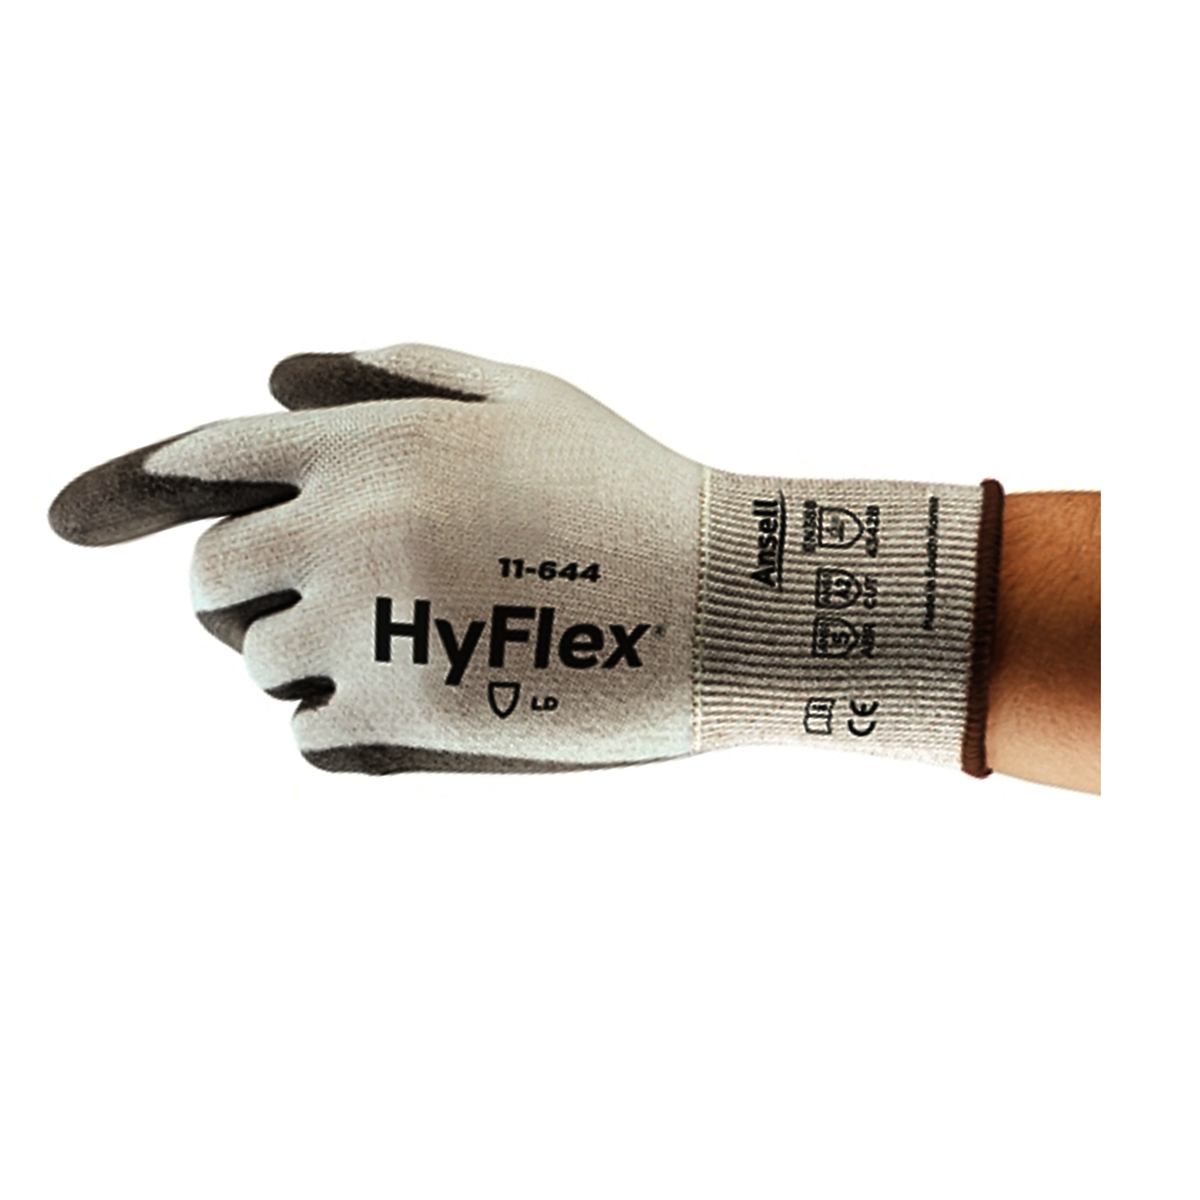 Blue HPPE Level 3 Cut Resistant Gloves, Polyurethane Coated